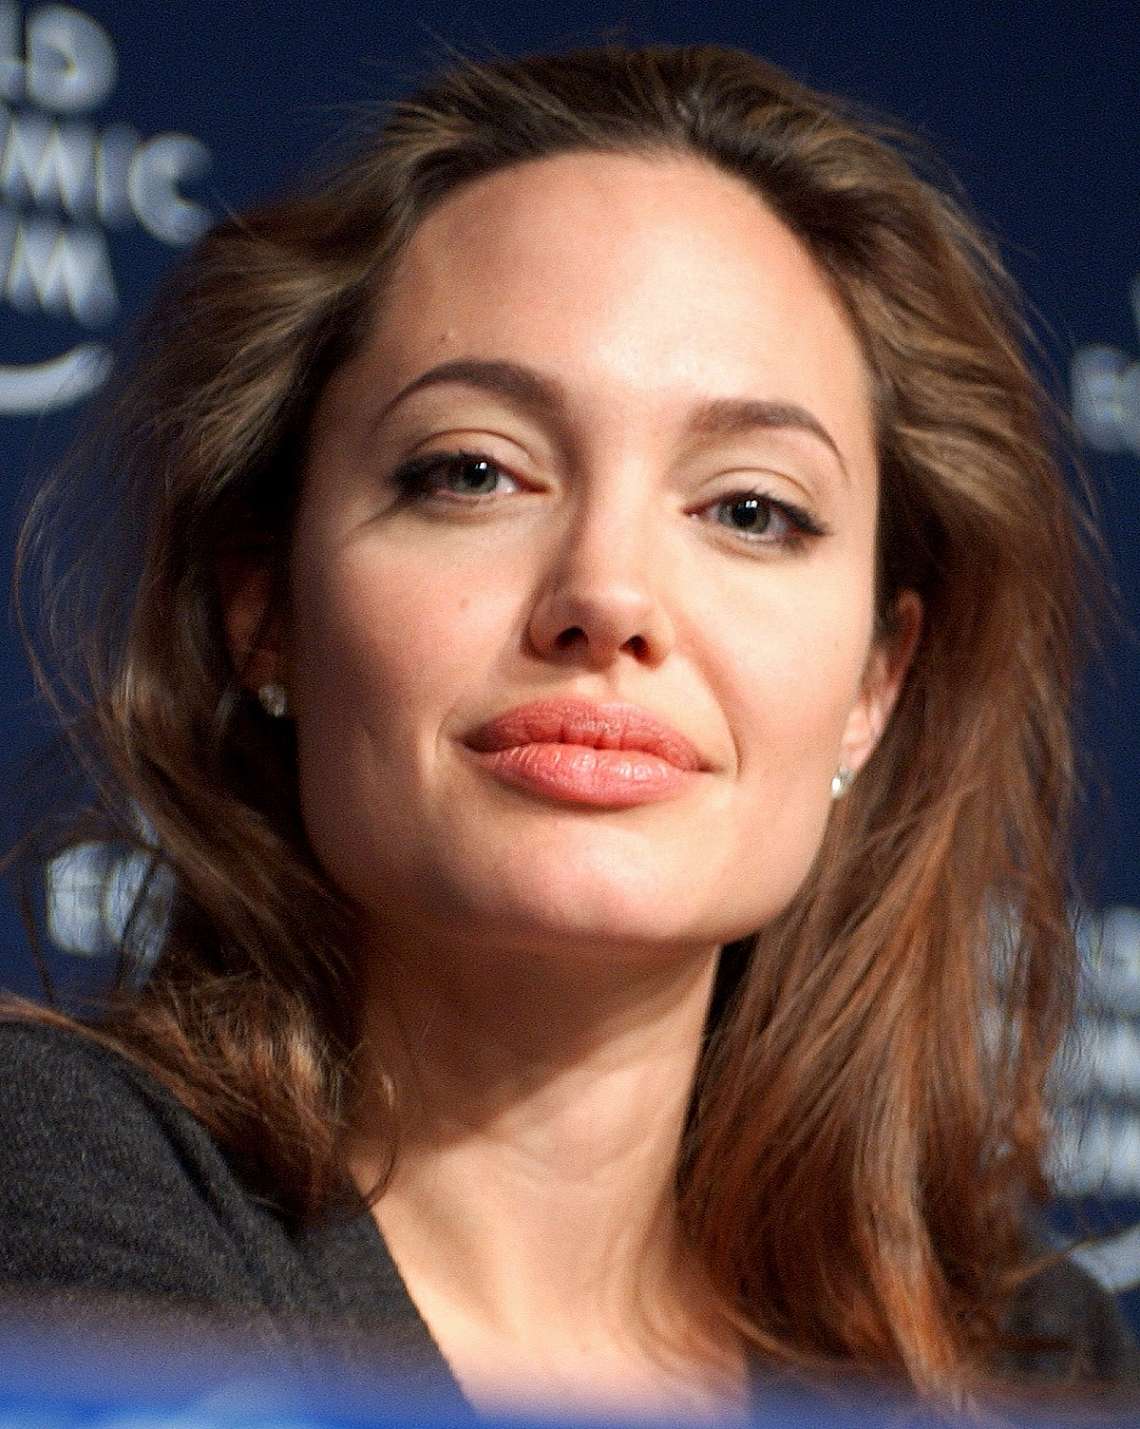 Angelina Jolie at Davos.jpg: Remy Steineggerderivative work: EnemyOfTheState, CC BY-SA 2.0, via Wikimedia Commons